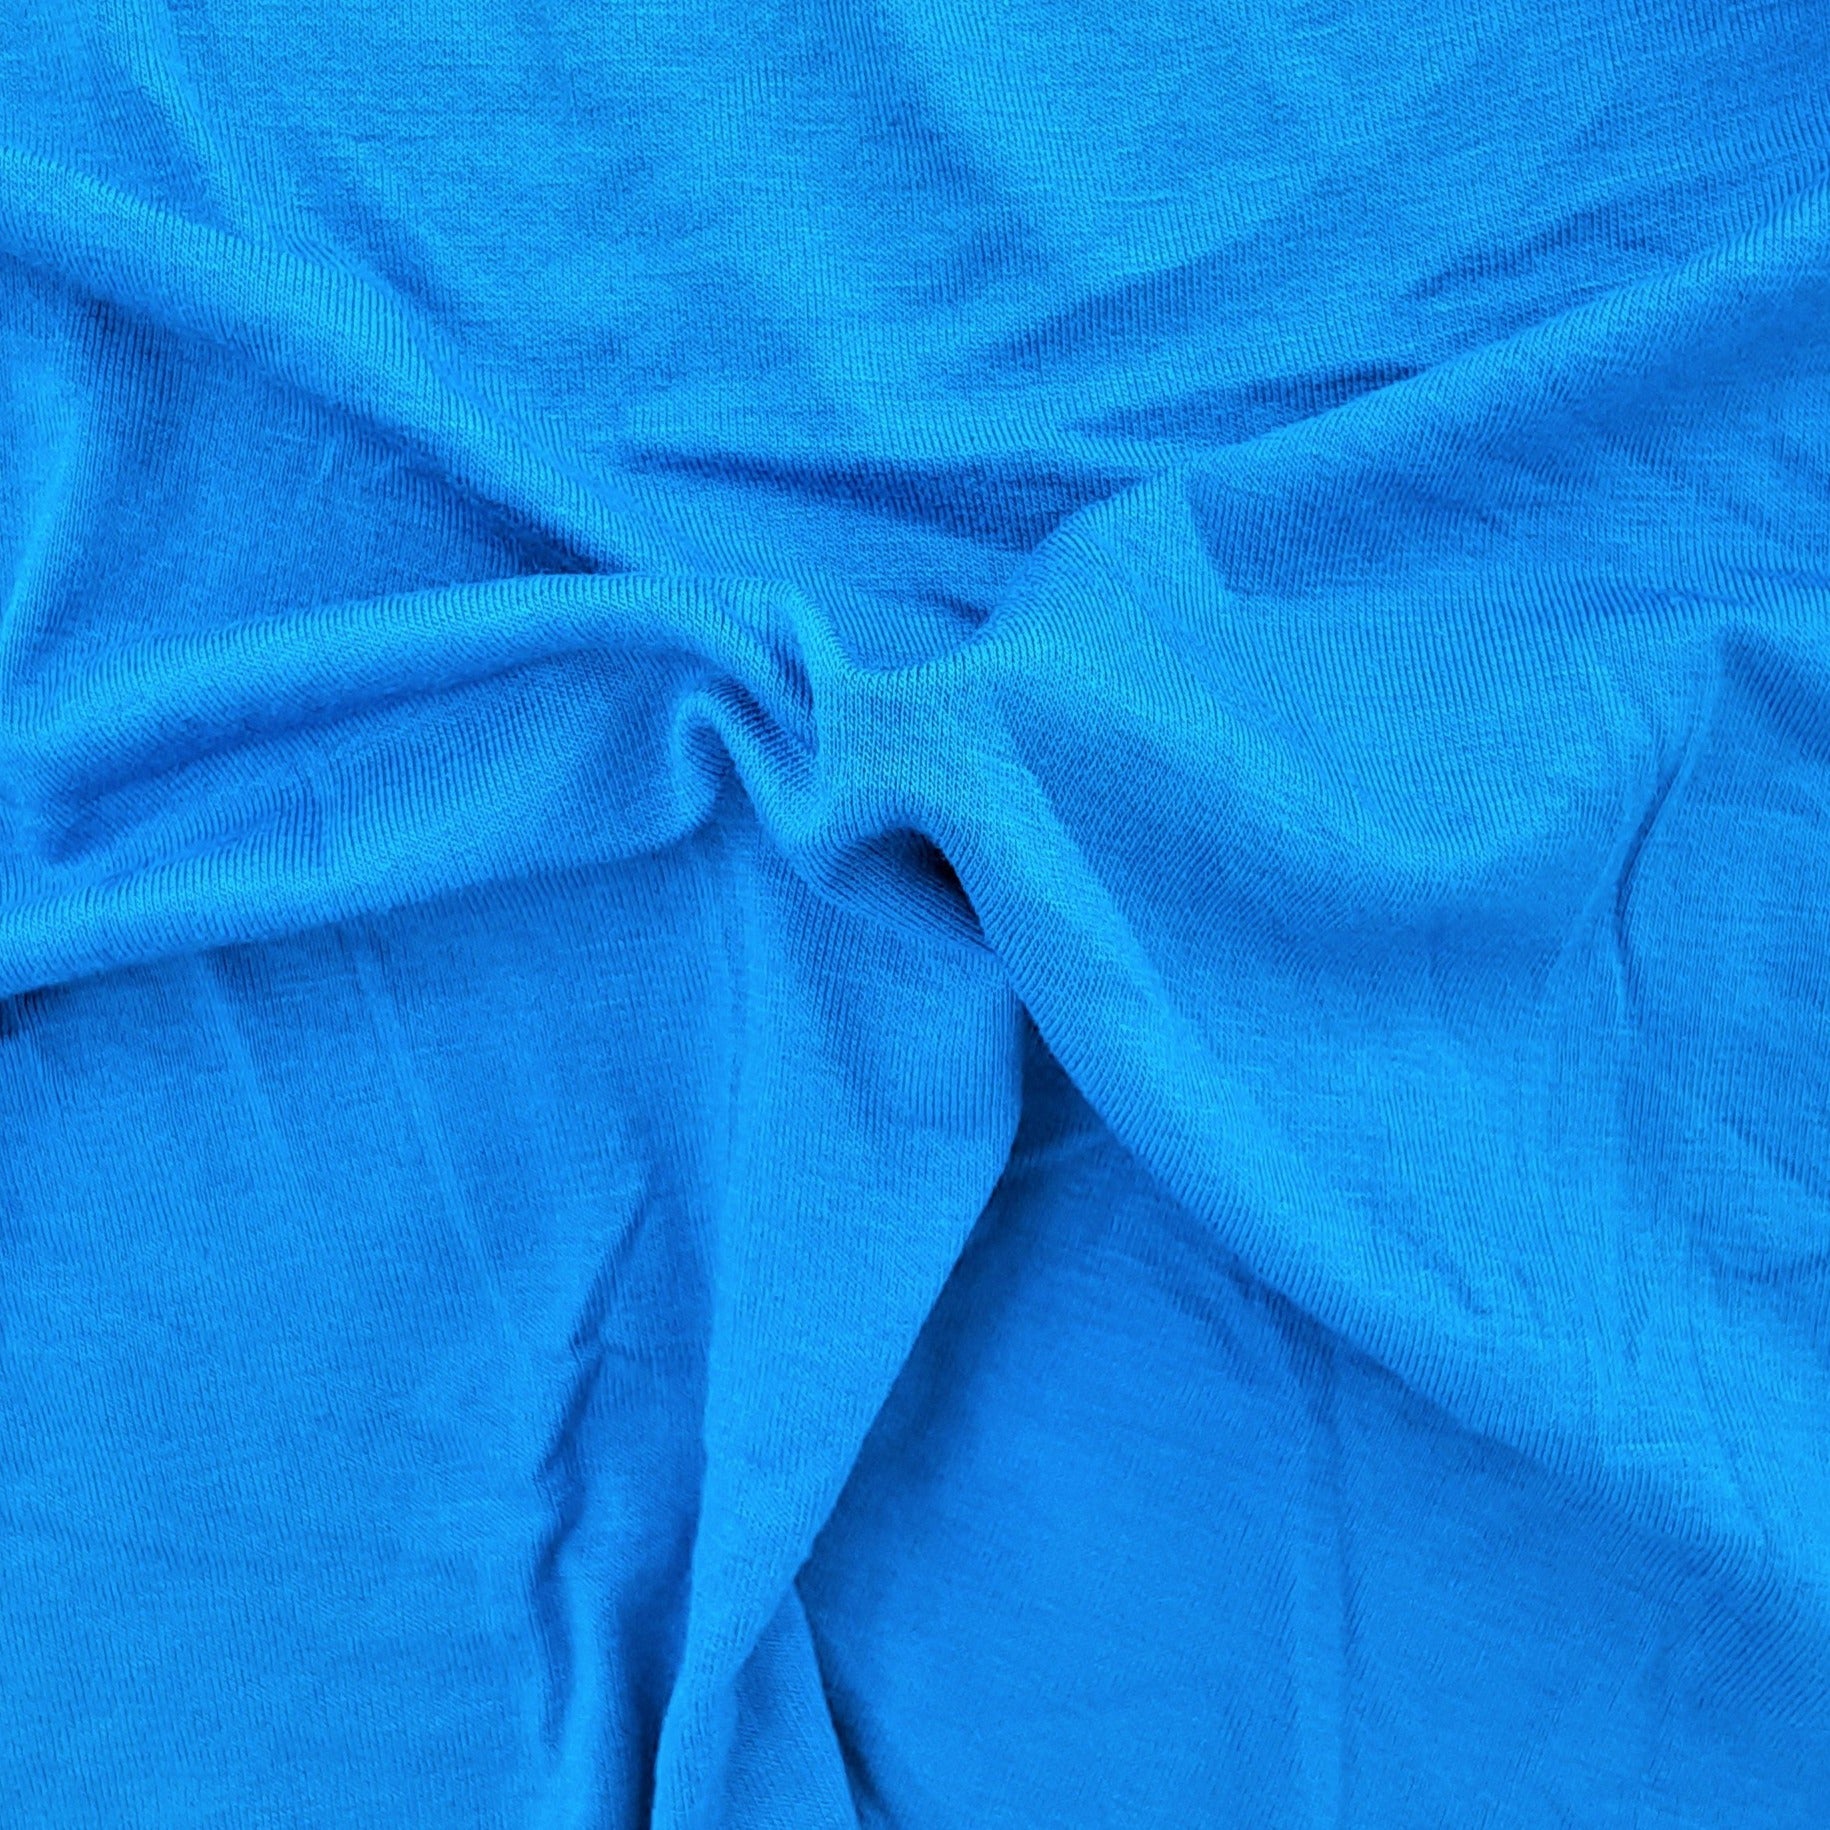 Turquoise #U121/123 J. Crew Rayon/Spandex 200GSM Jersey Knit Fabric - SKU 6851A